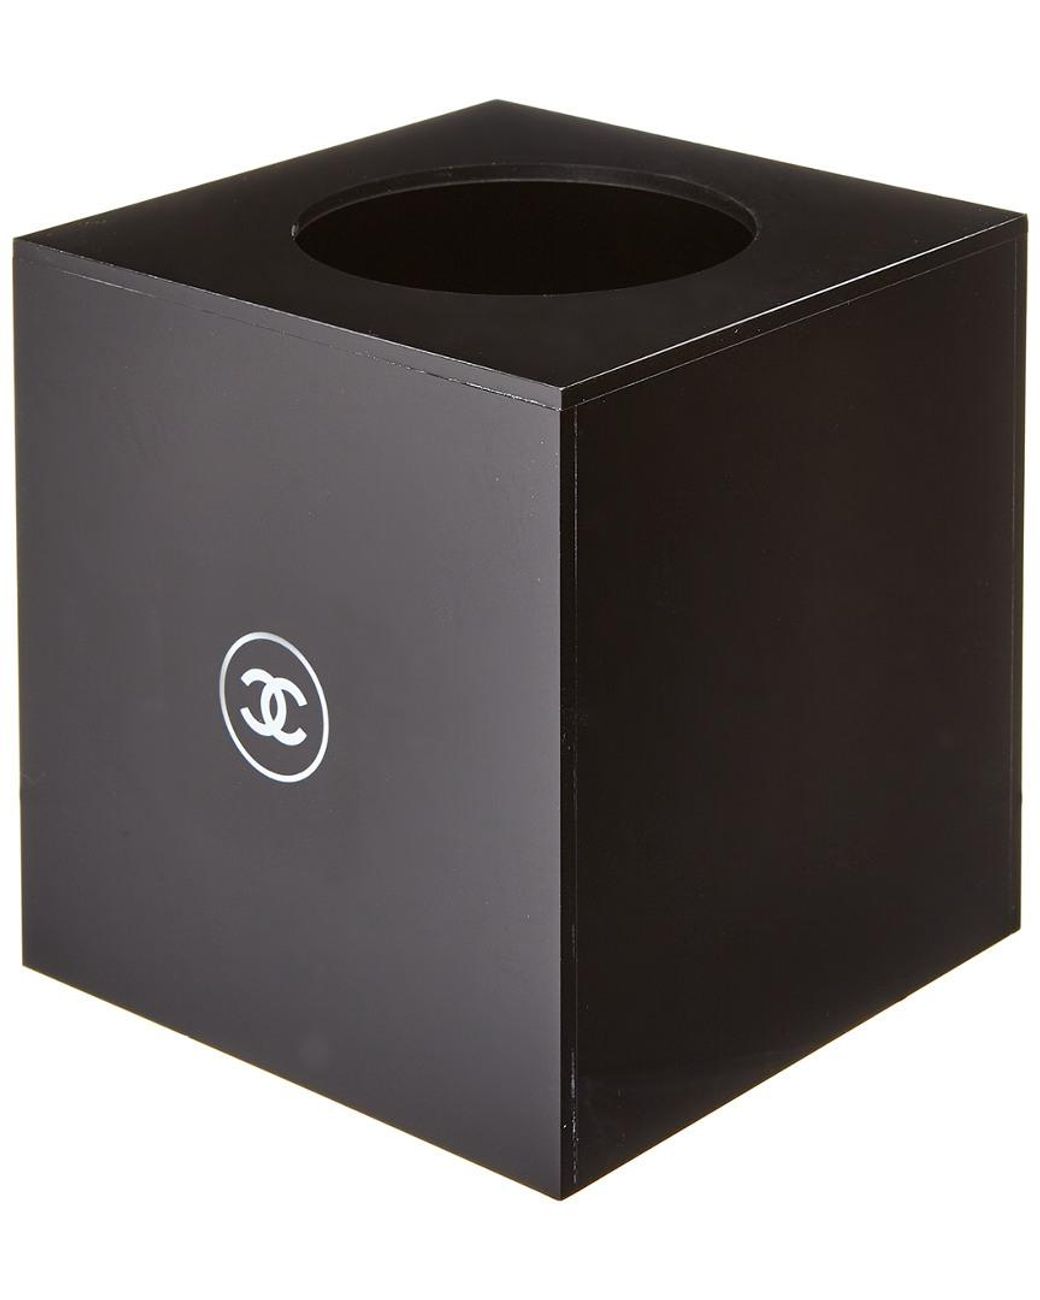 Chanel Black Acrylic Cube Tissue Box